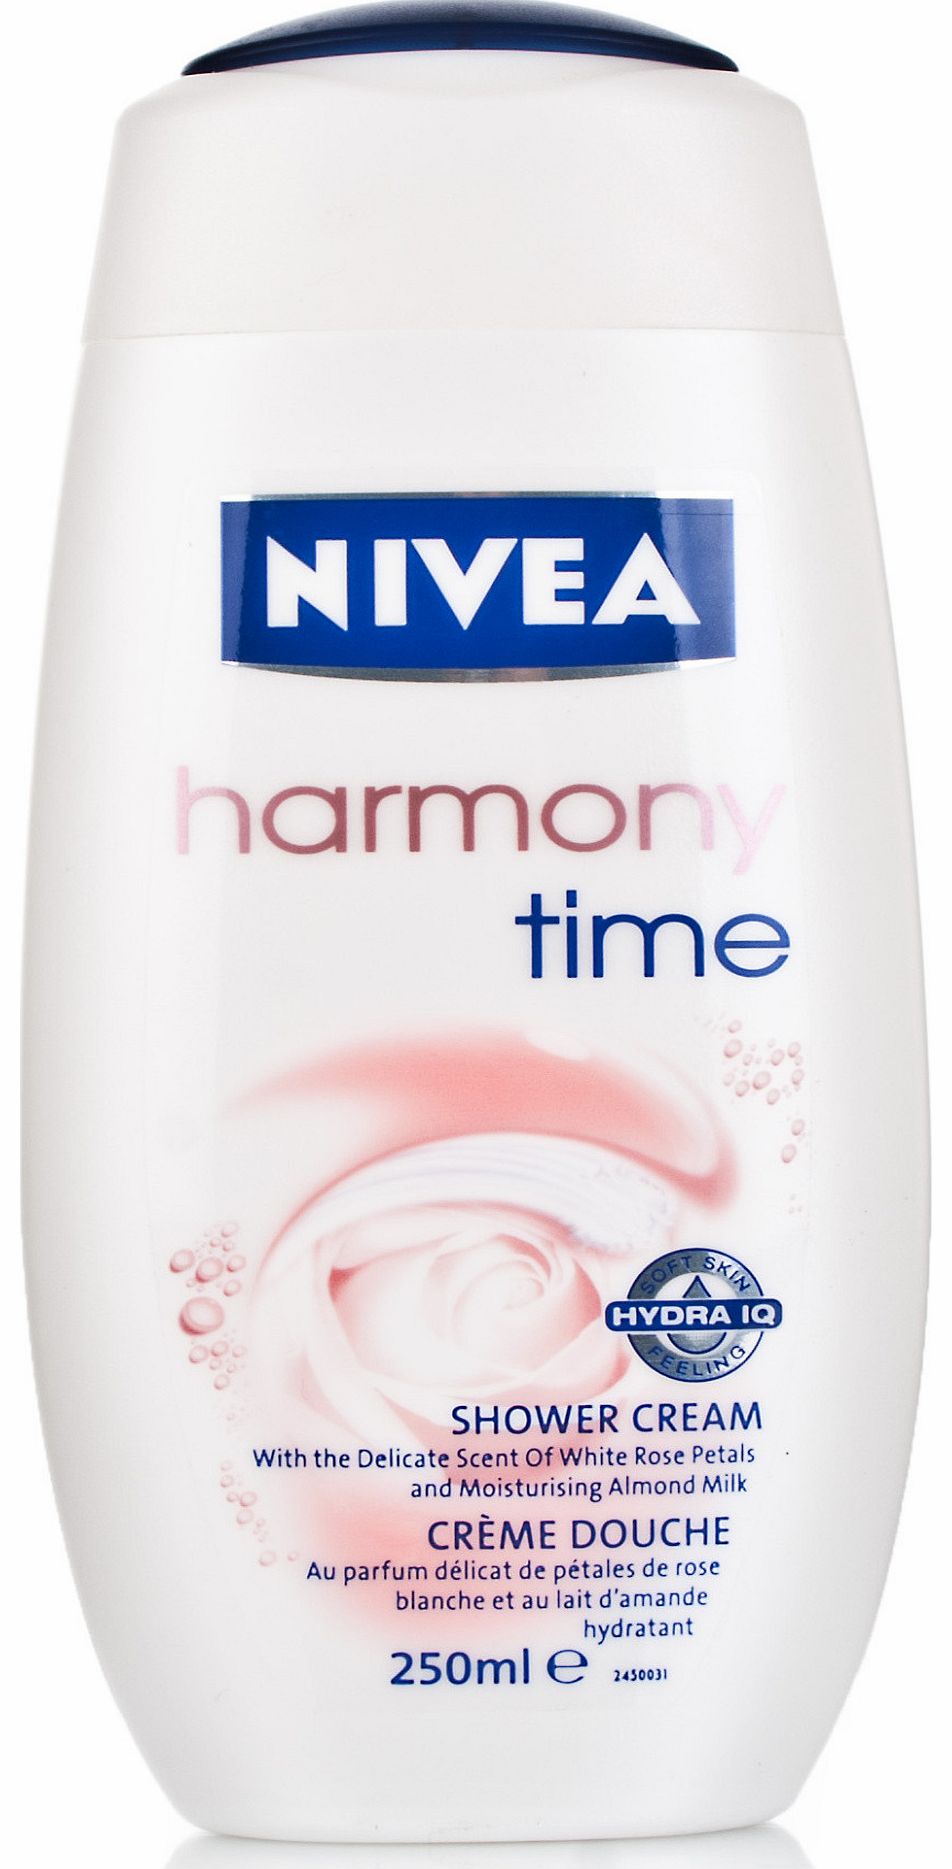 Nivea Harmony Time Shower Cream